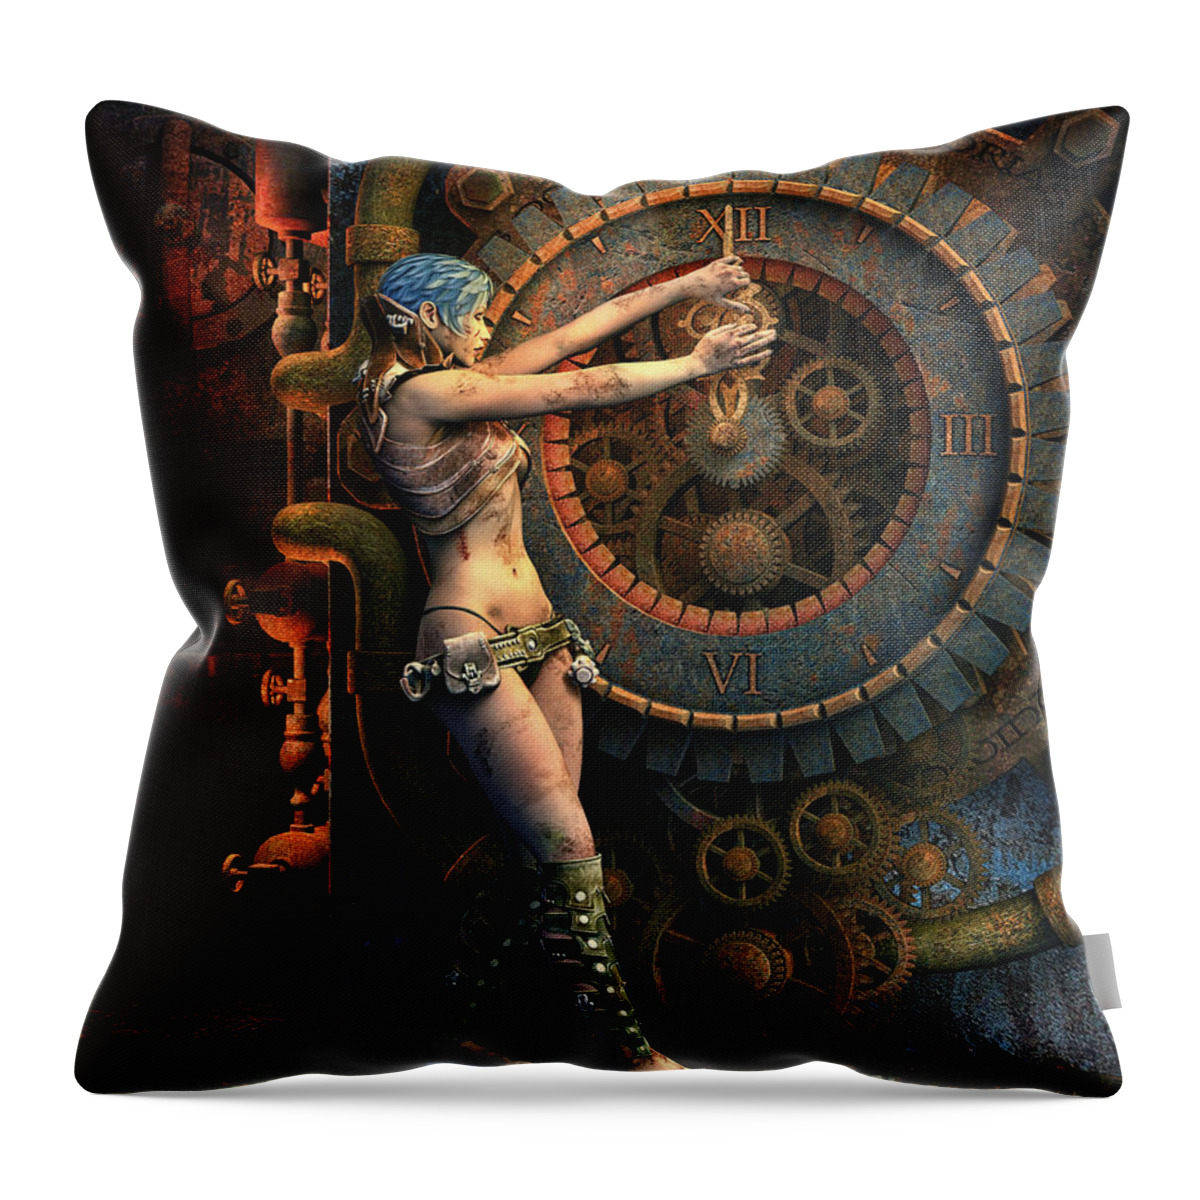 3d Throw Pillow featuring the digital art Midnight by Jutta Maria Pusl